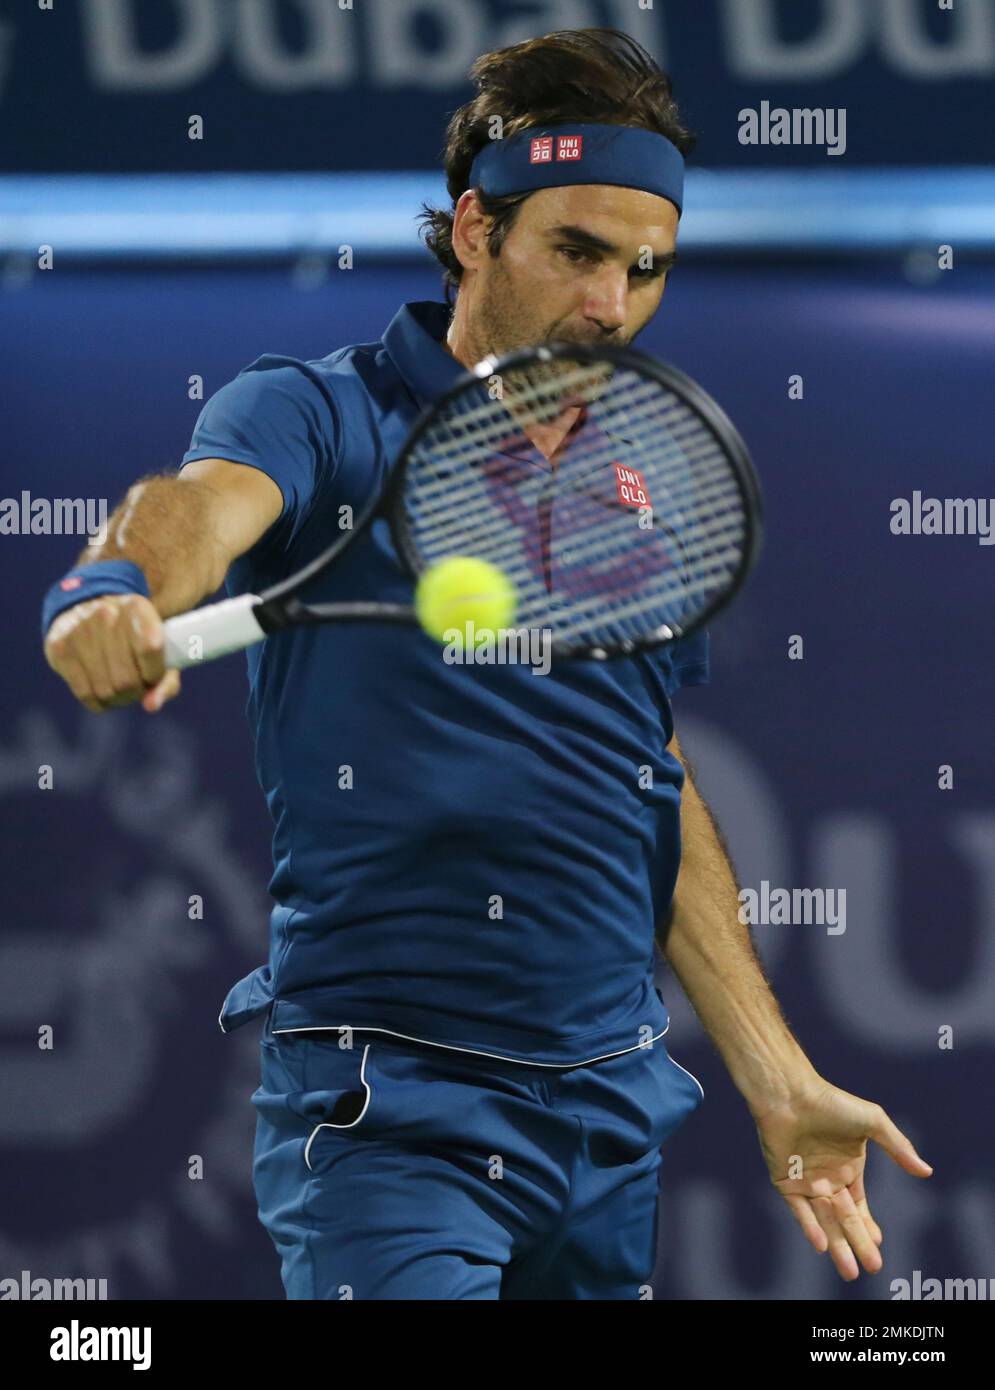 Roger Federer of Switzerland returns the ball to Marton Fucsovics of Hungry during their match at the Dubai Duty Free Tennis Championship, in Dubai, United Arab Emirates, Thursday, Feb